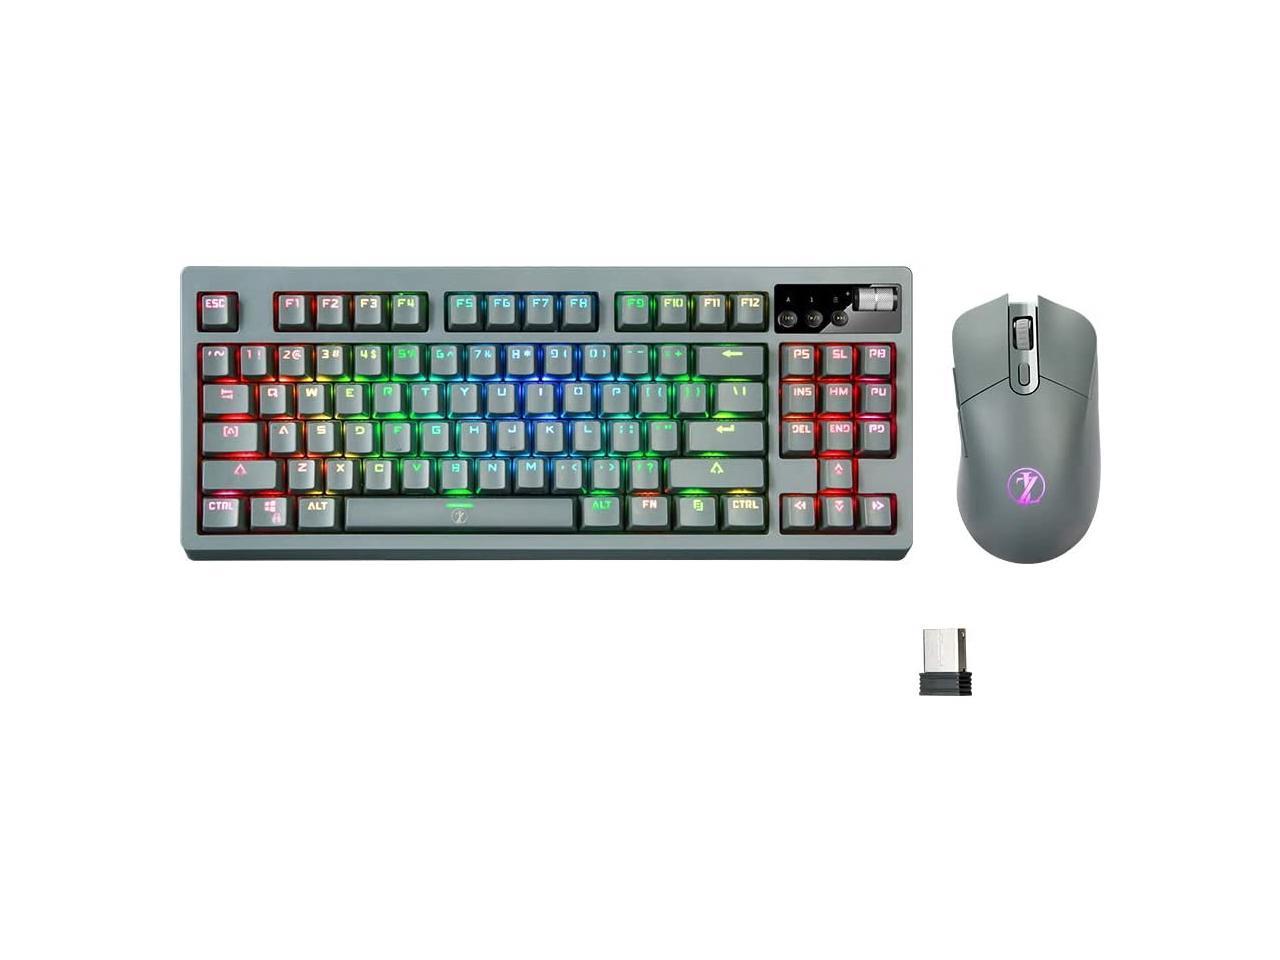 ZJFKSDYX MK87 2.4G Wireless Mechanical RGB Keyboard and Mouse 